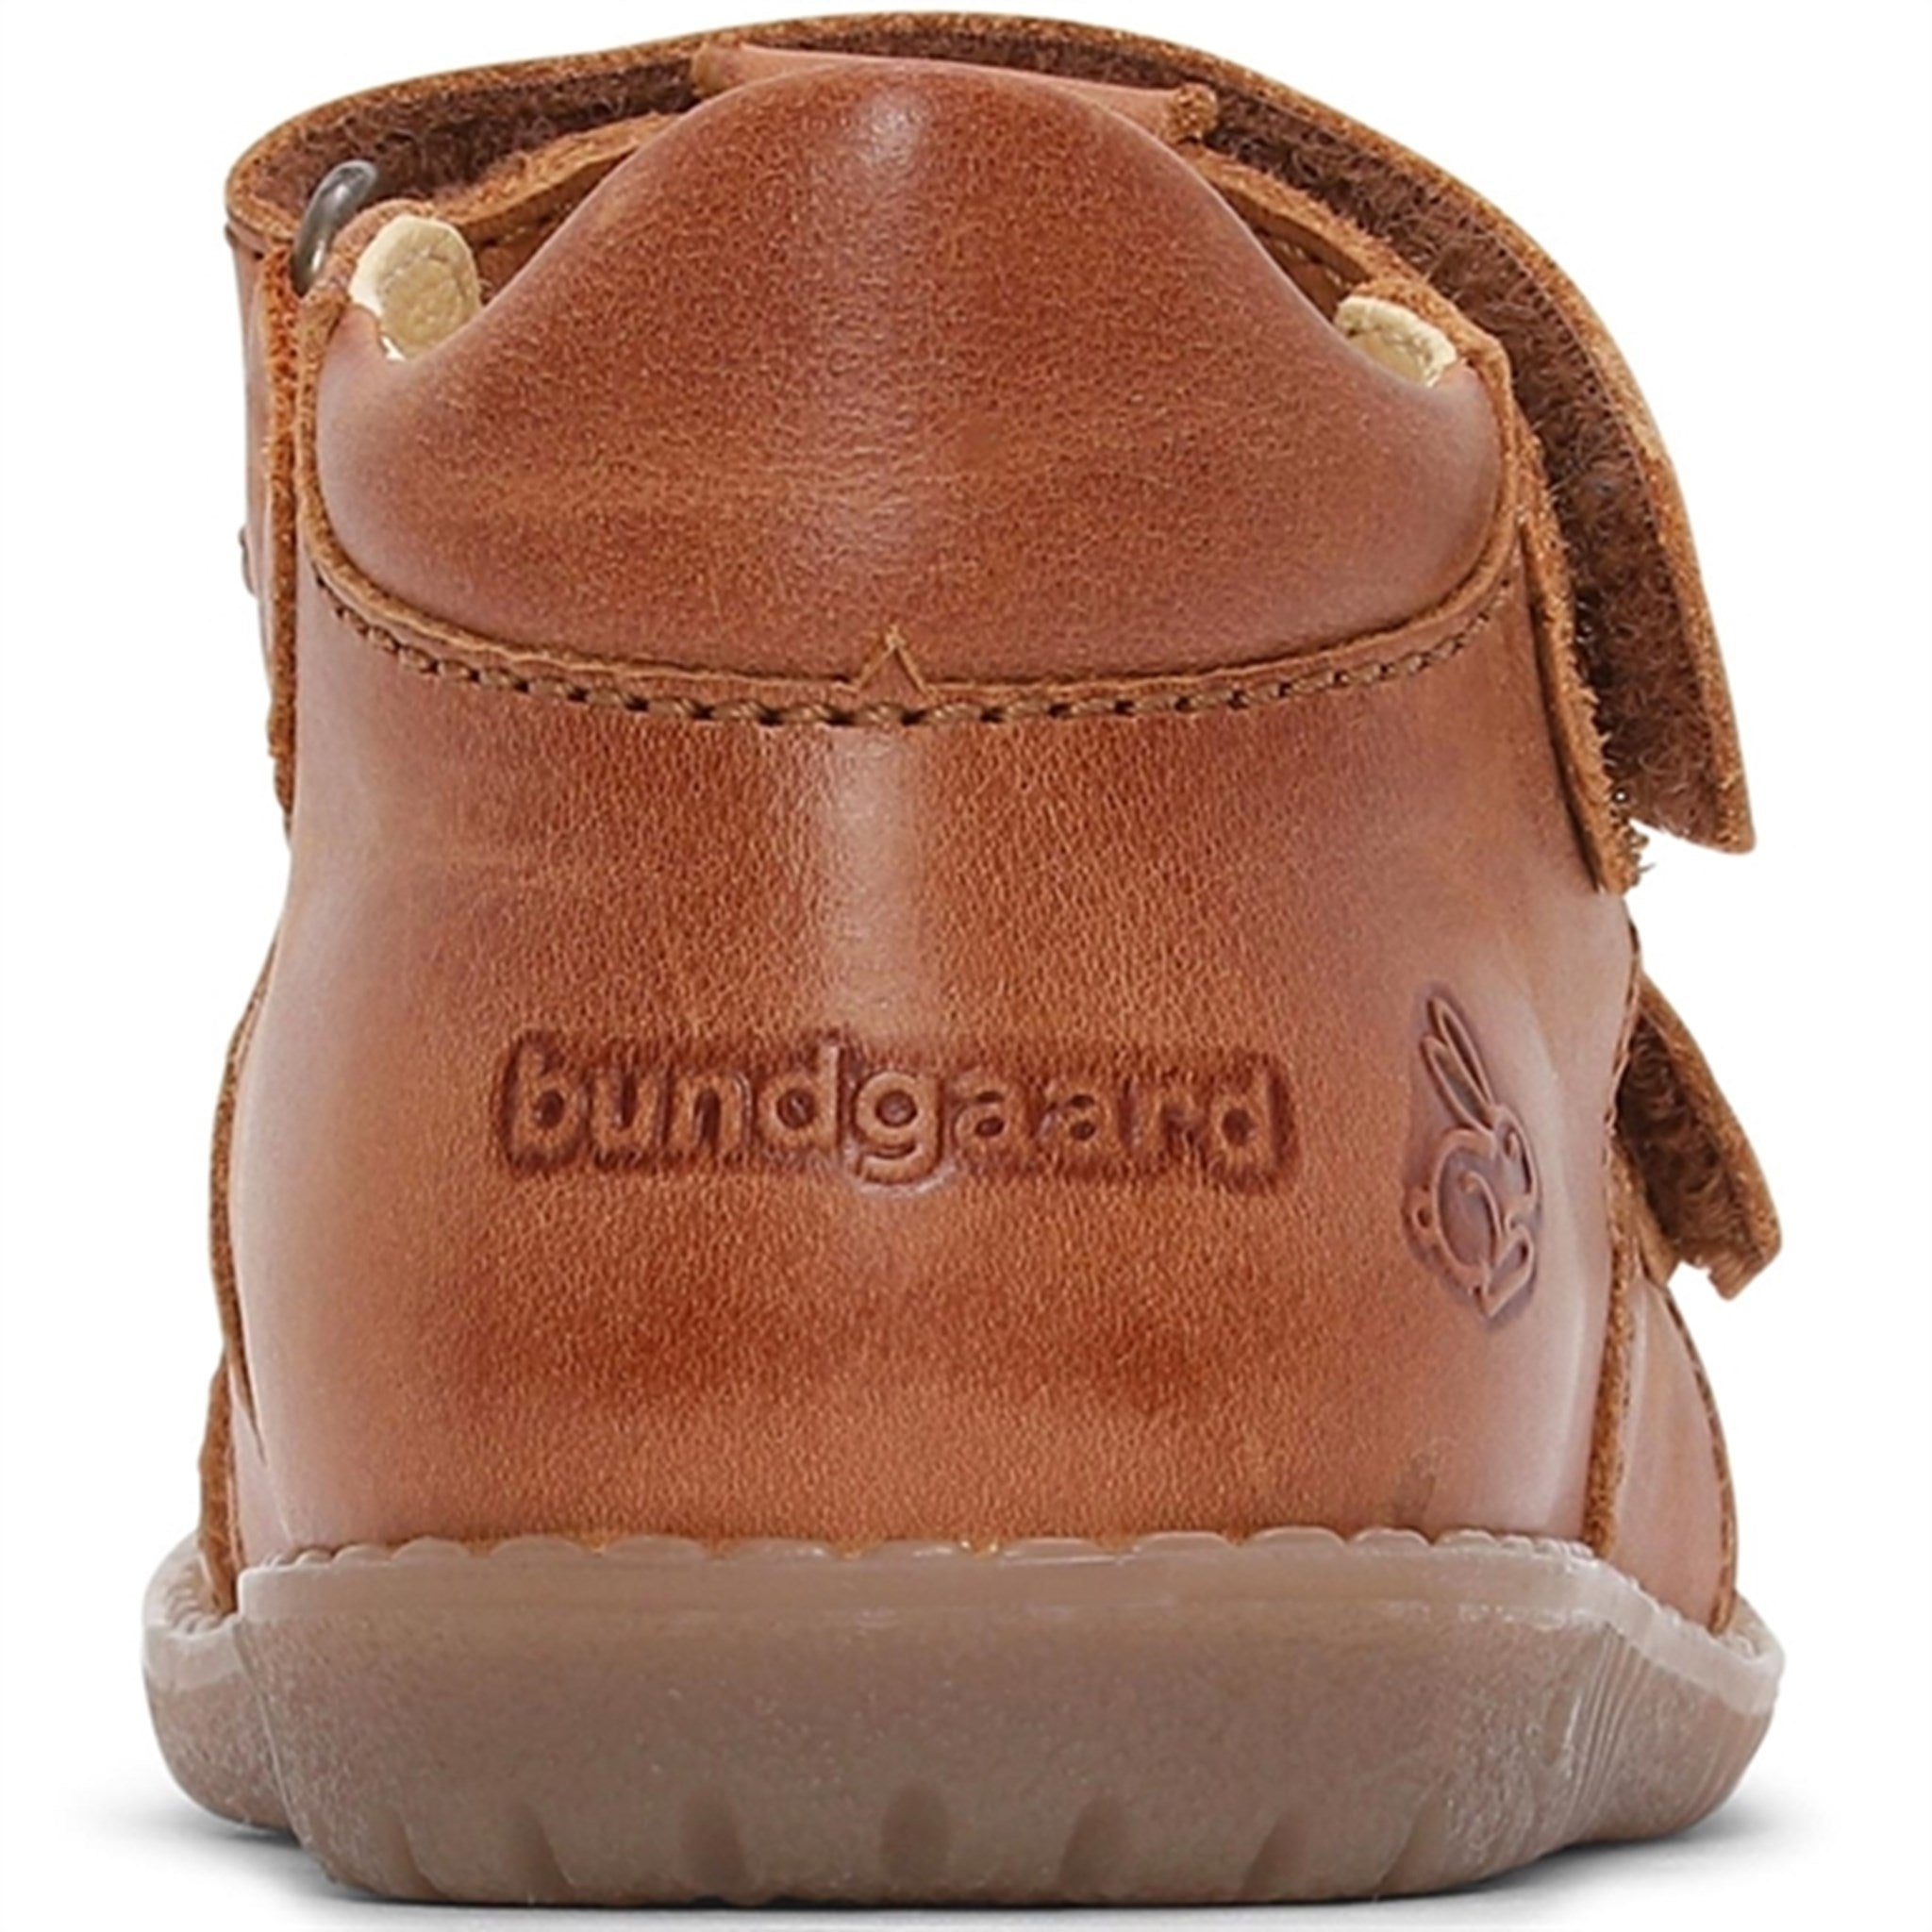 Bundgaard Sandal Ranjo II Tan 5